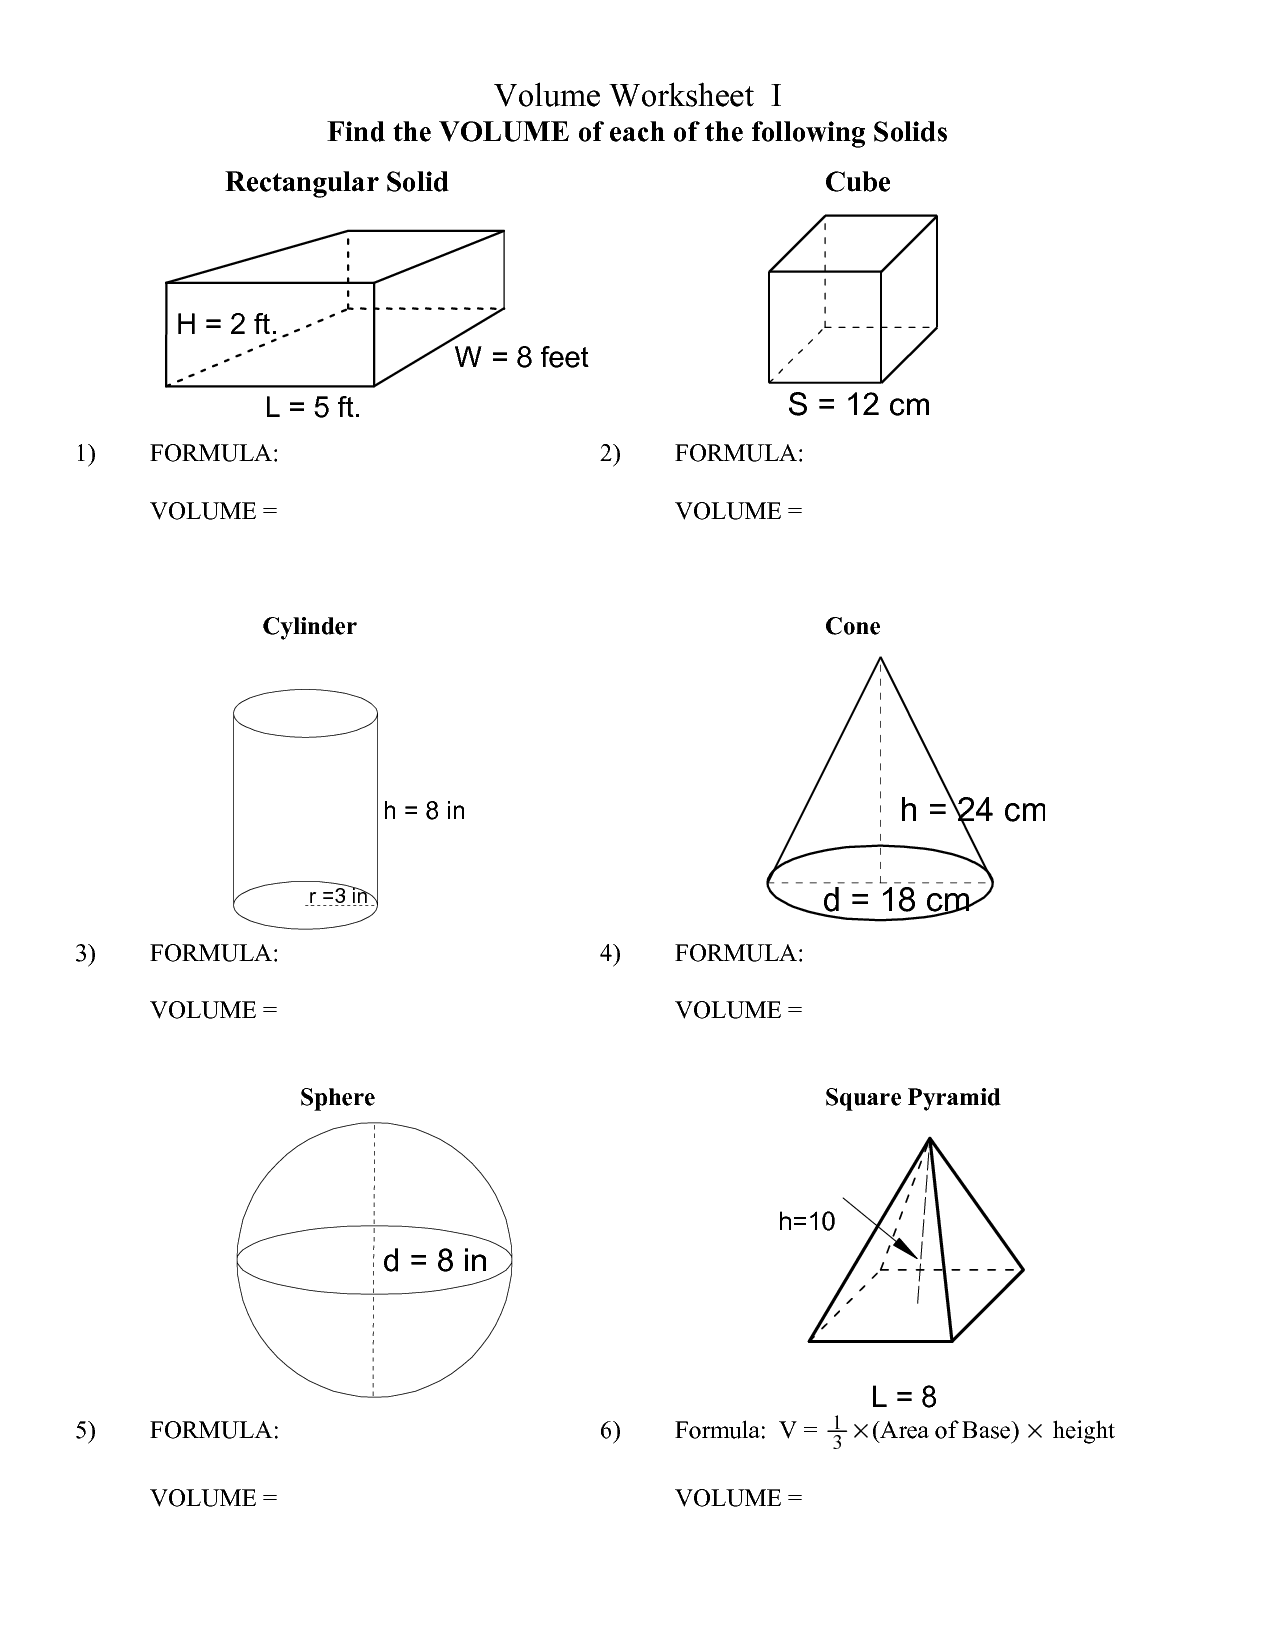 Volume Pyramid Worksheet Image